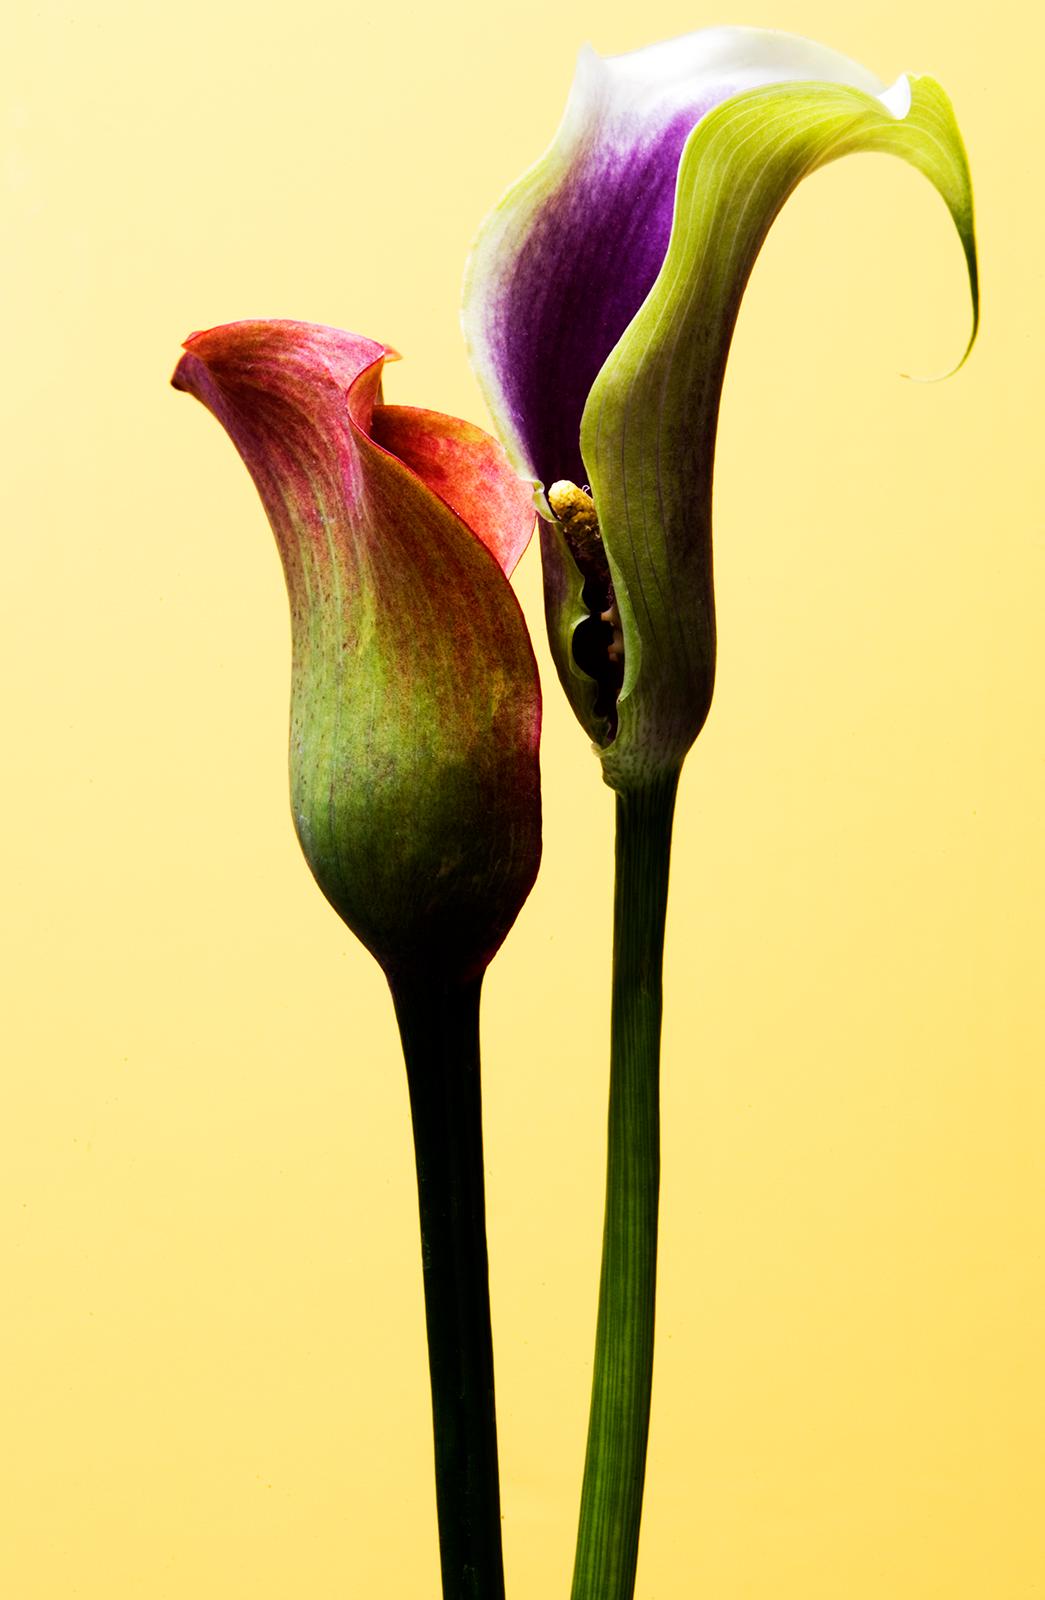 Ian Sanderson Color Photograph - Flowers - Signed limited edition fine art print, Color nature photography